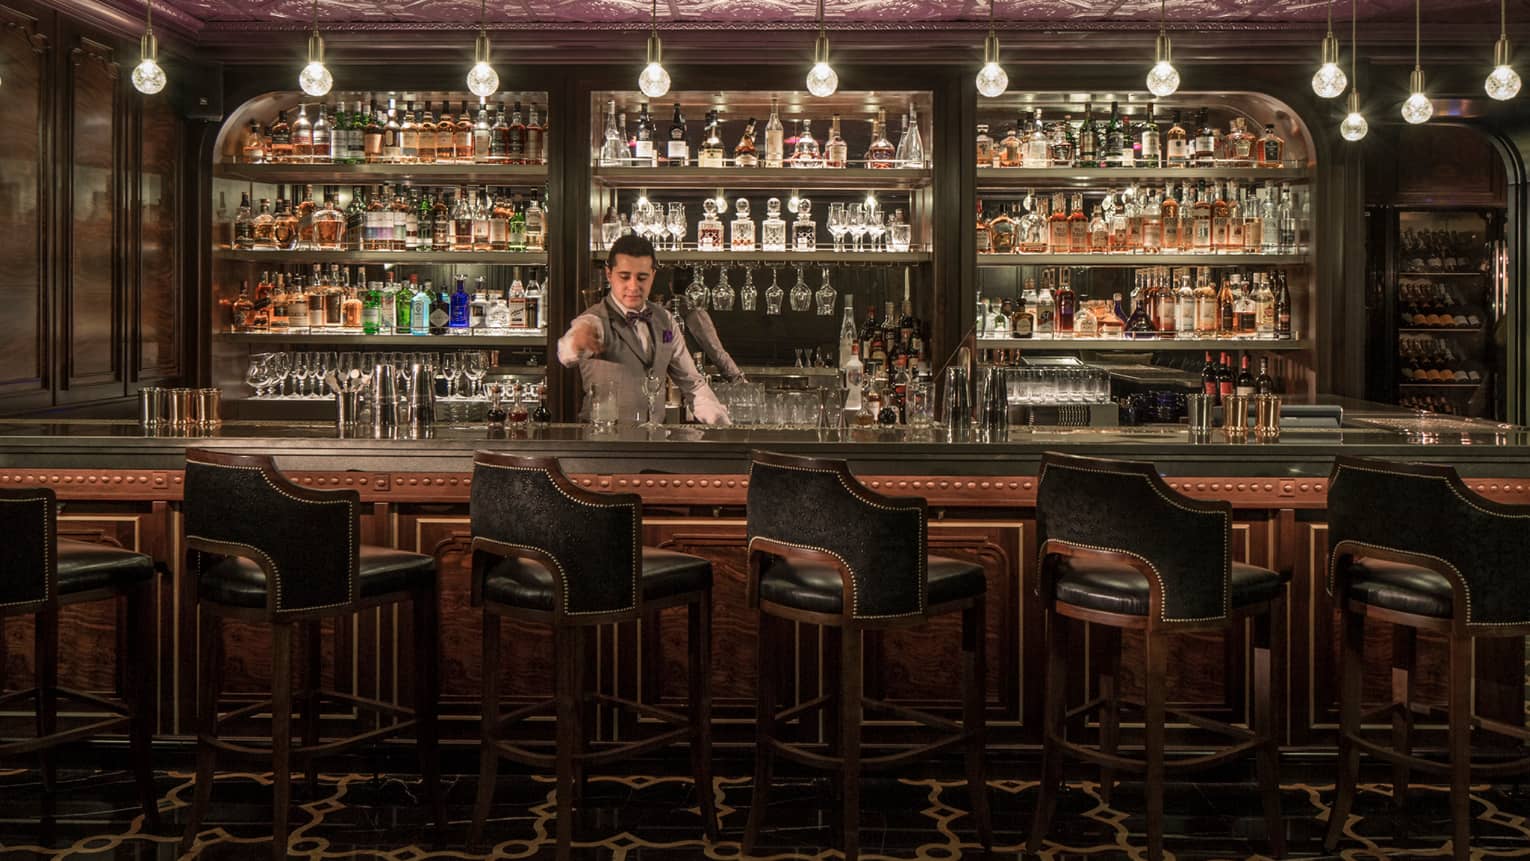 SIRR bartender in vest stands behind bar stirring cocktail, glasses and bottles lining wall behind him